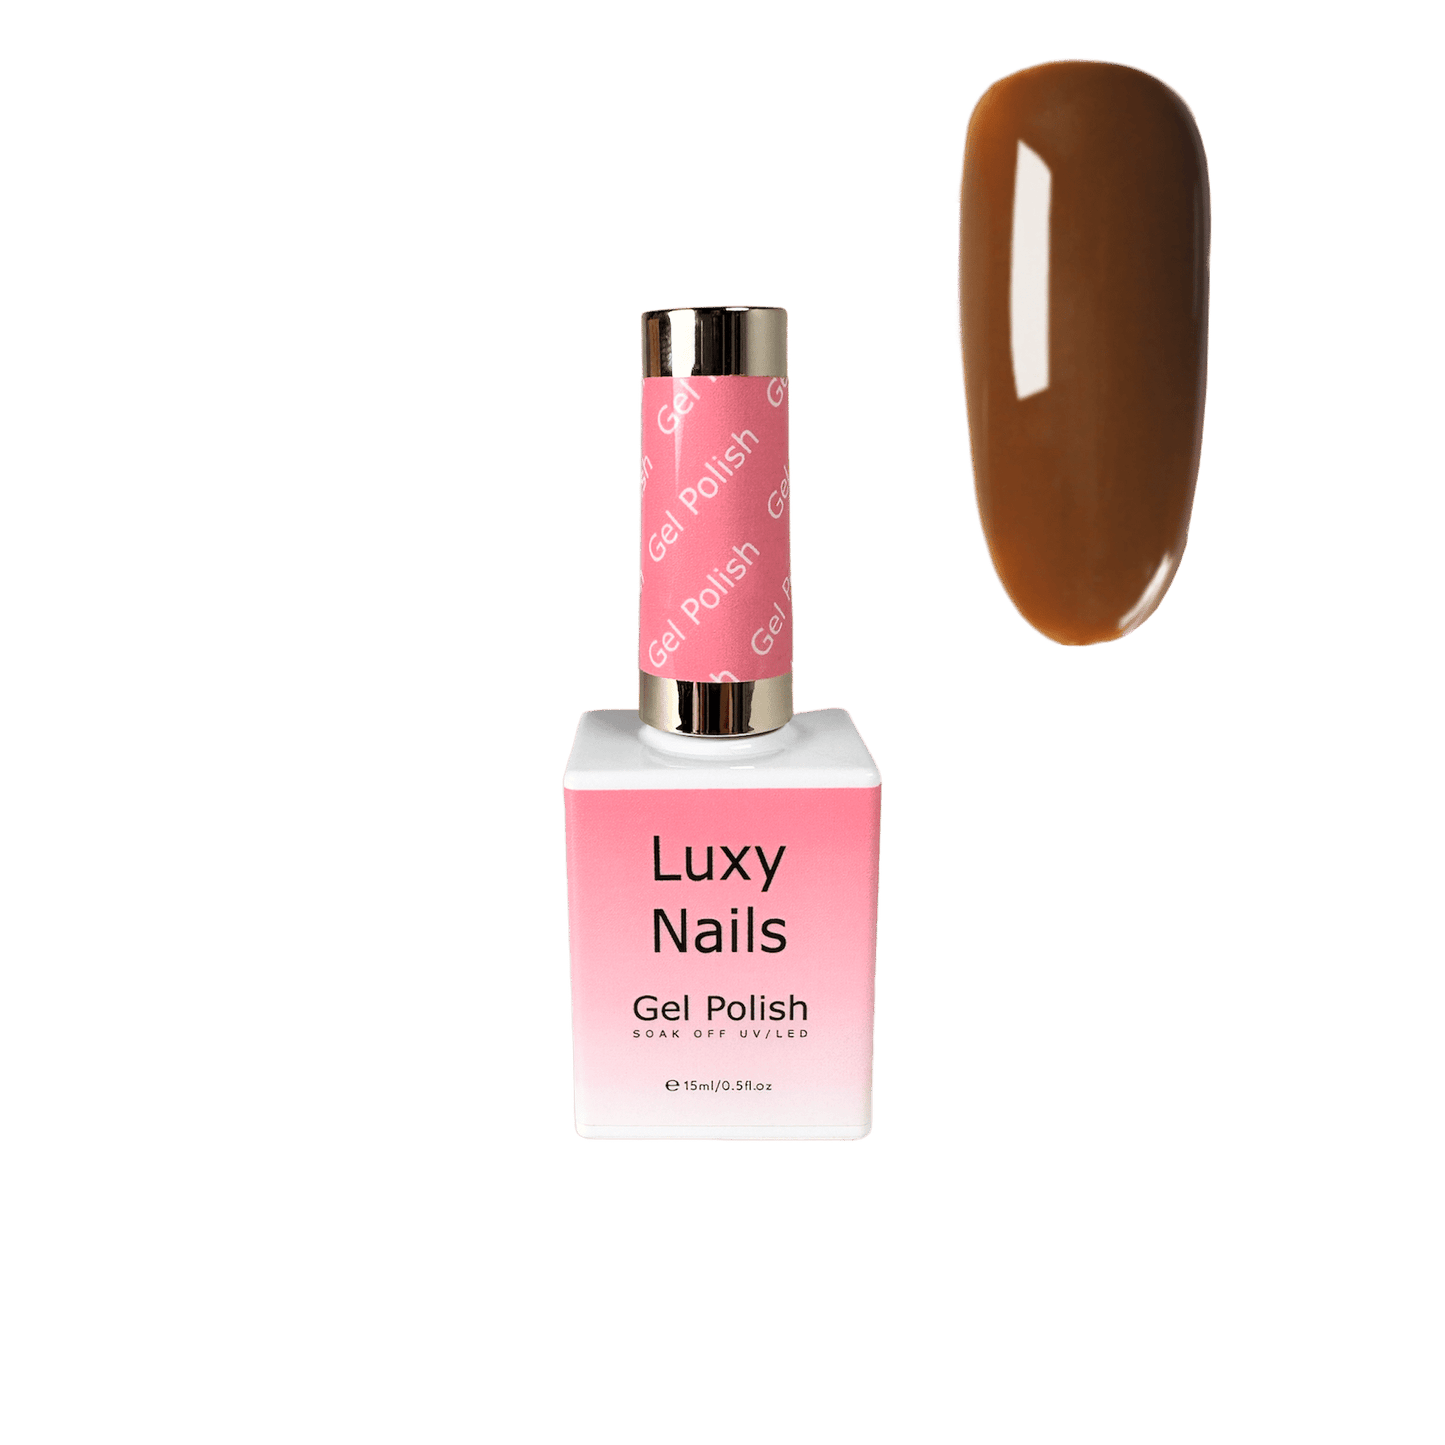 New Luxy Nails Gel Polish - Chocolate Fudge